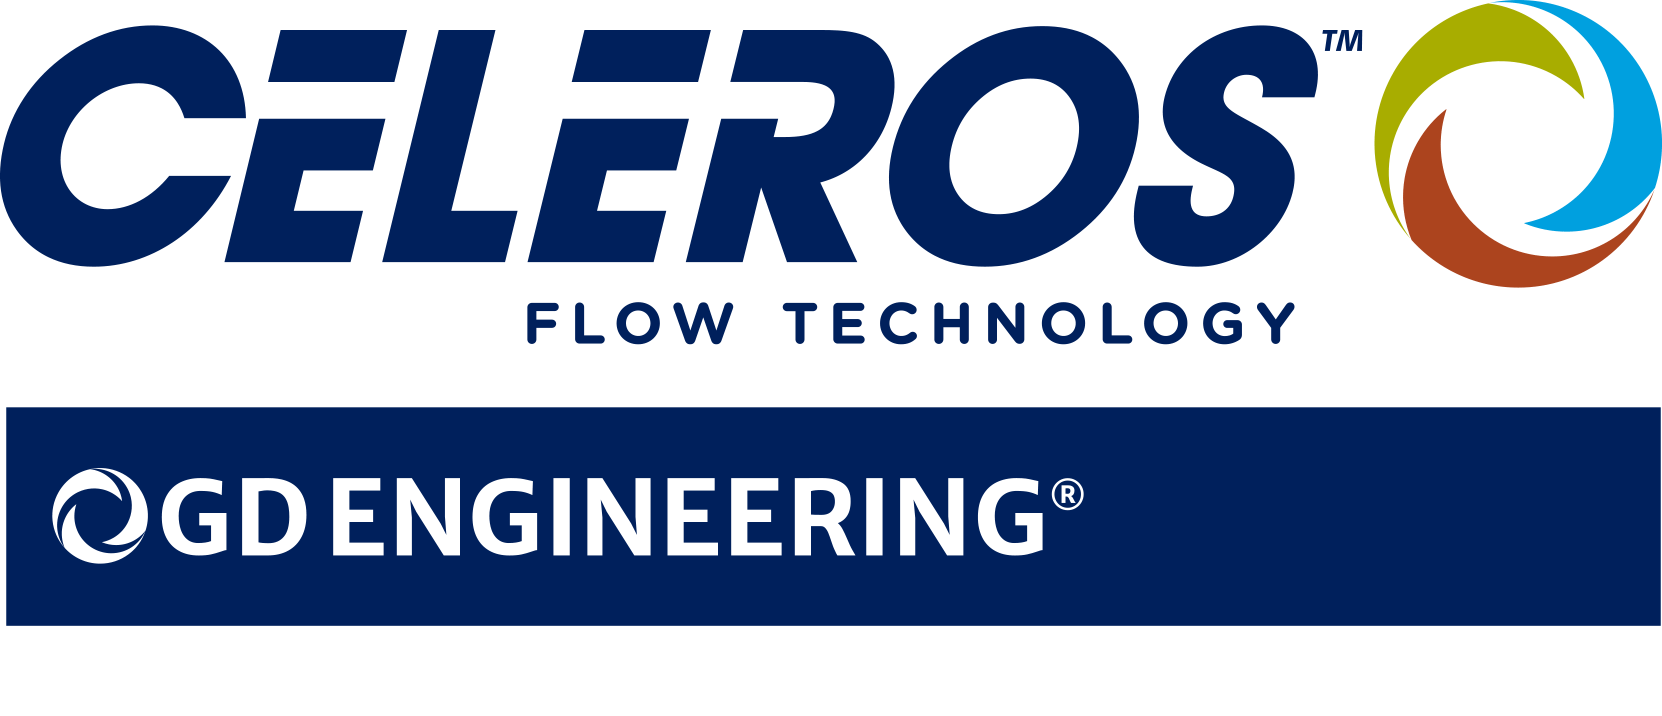 Celeros Flow Technology